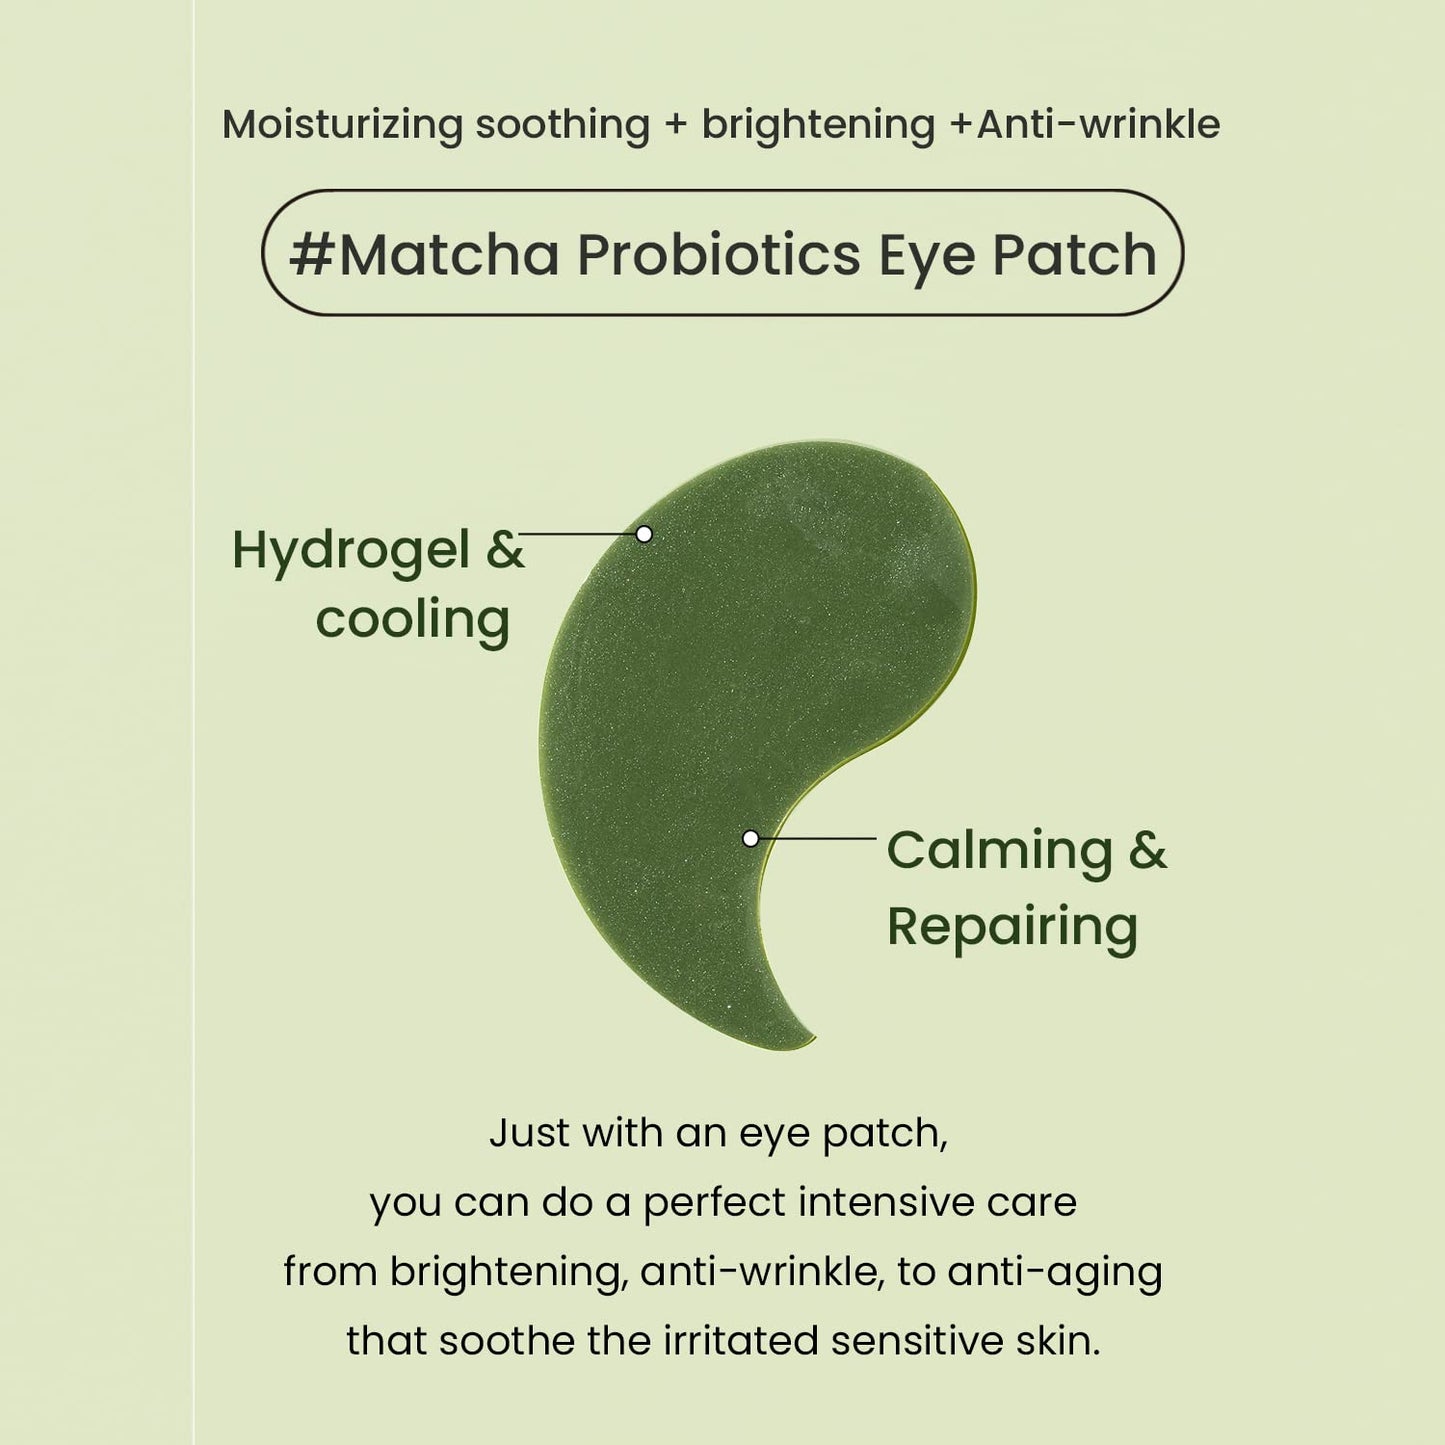 HEIMISH Matcha Biome Hydrogel Eye Patch